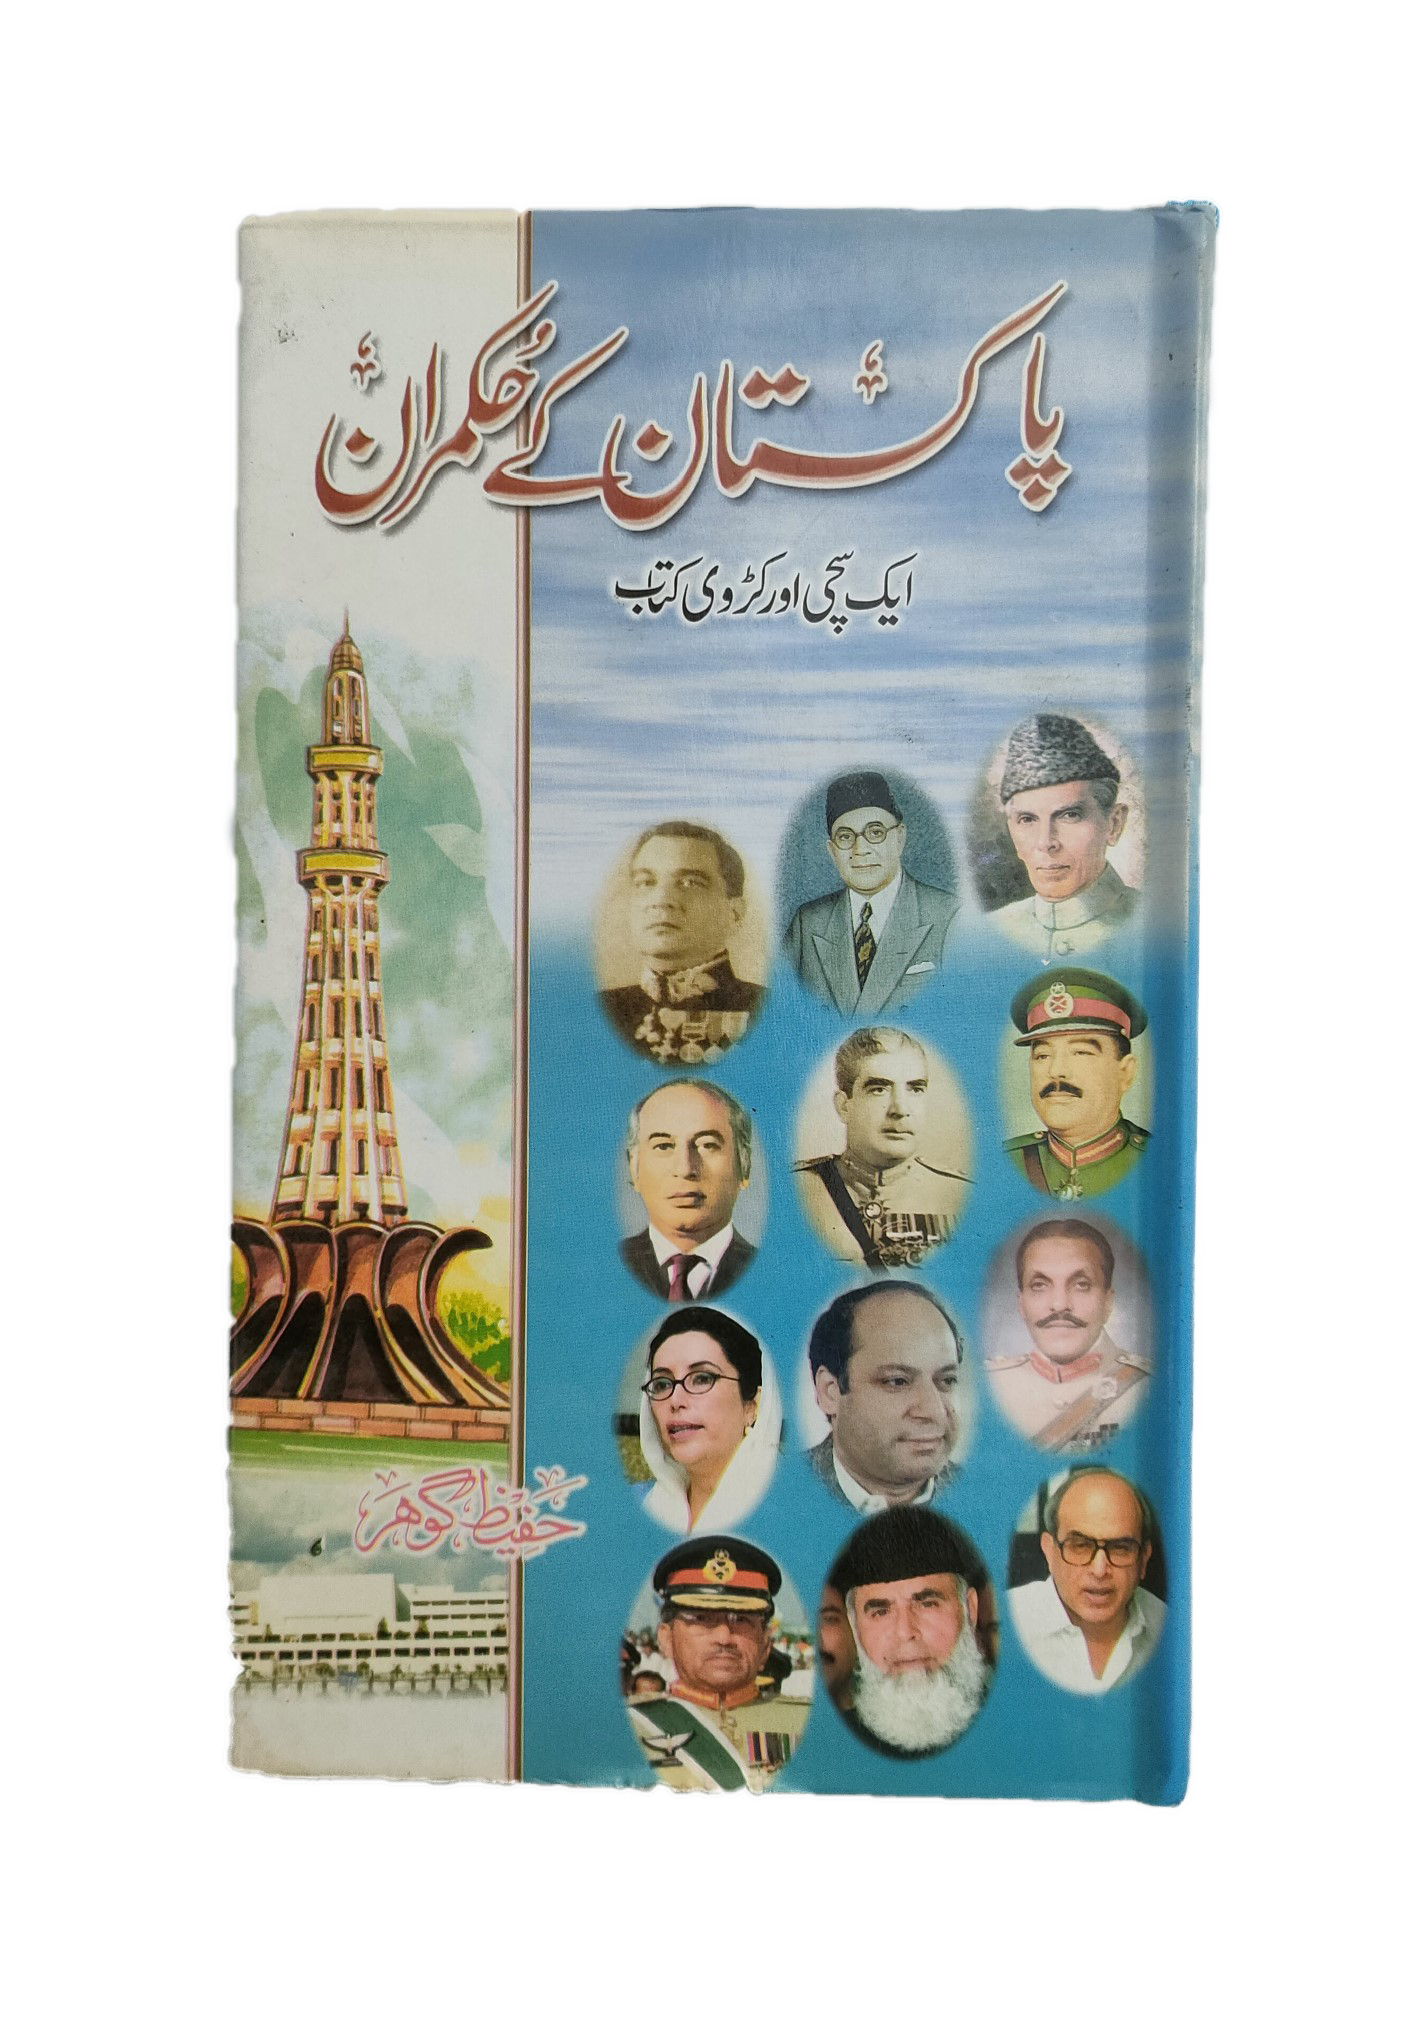 Pakistan Ke Hukmaran (Rulers of Pakistan)